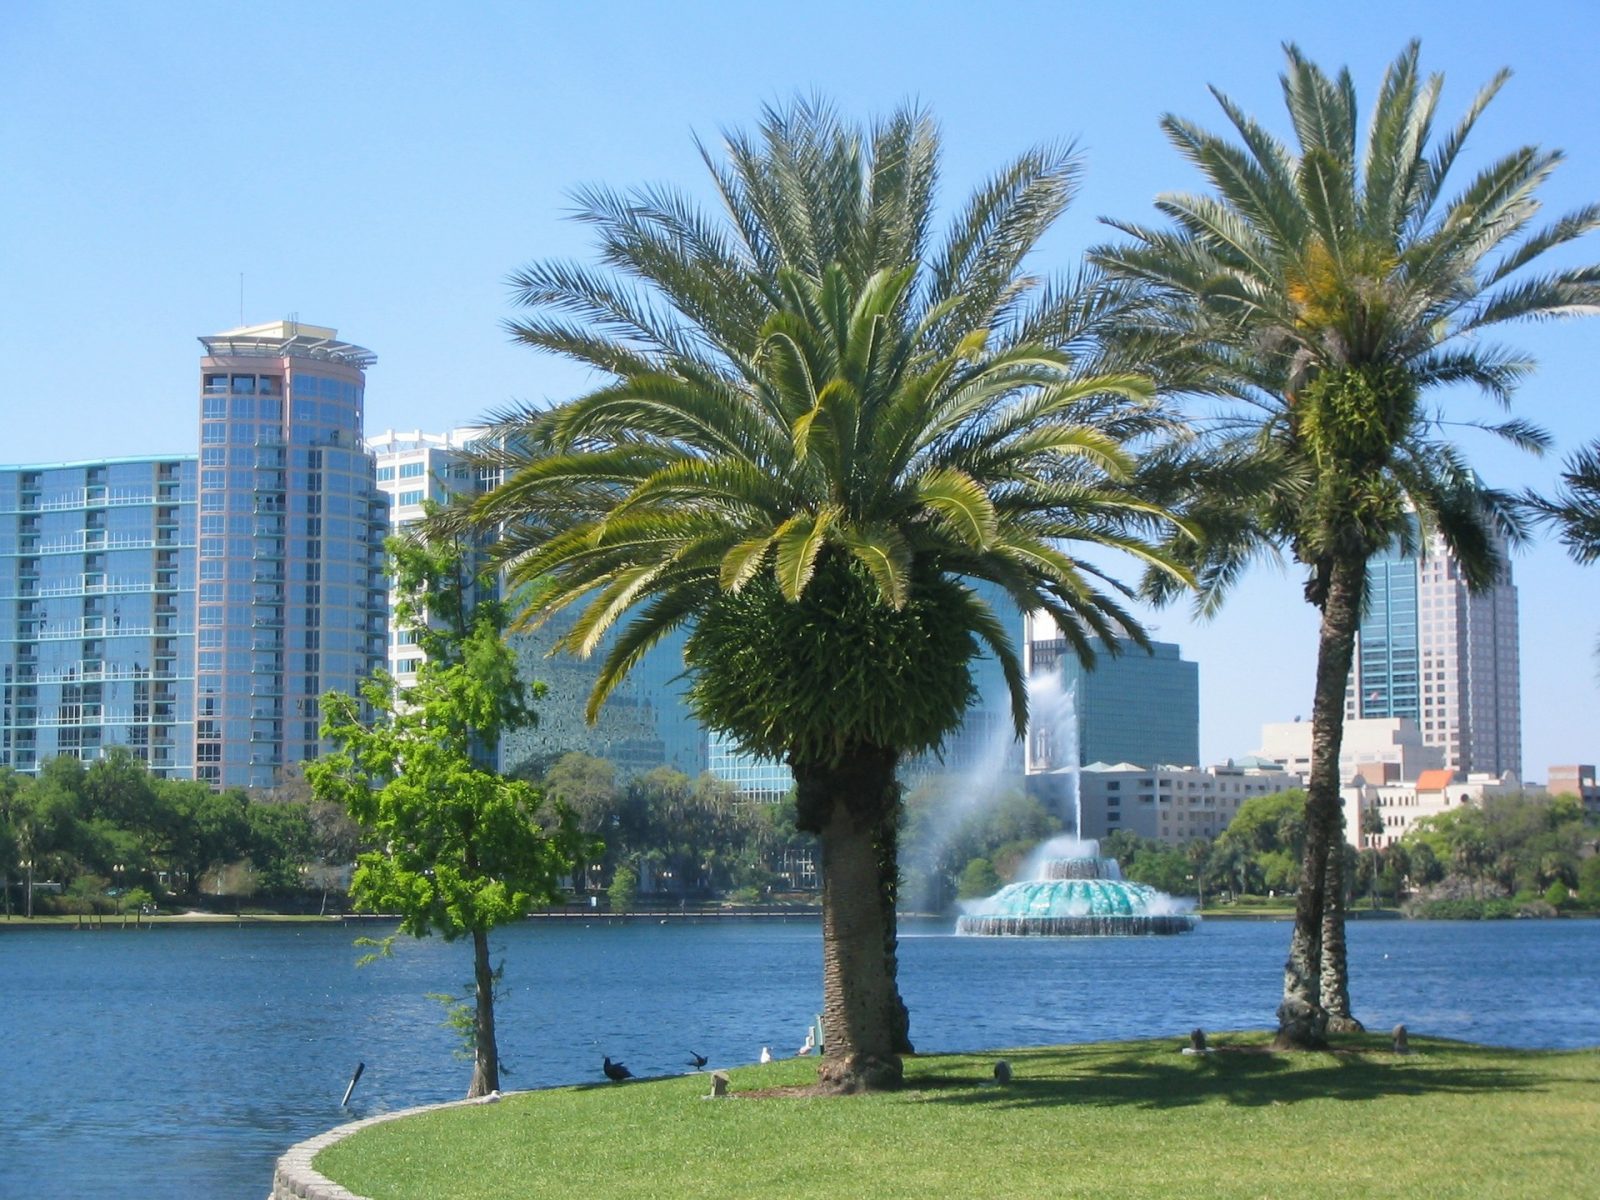 What to do in Orlando: Lake Eola, Orlando. A popular stop on Orlando city tours.